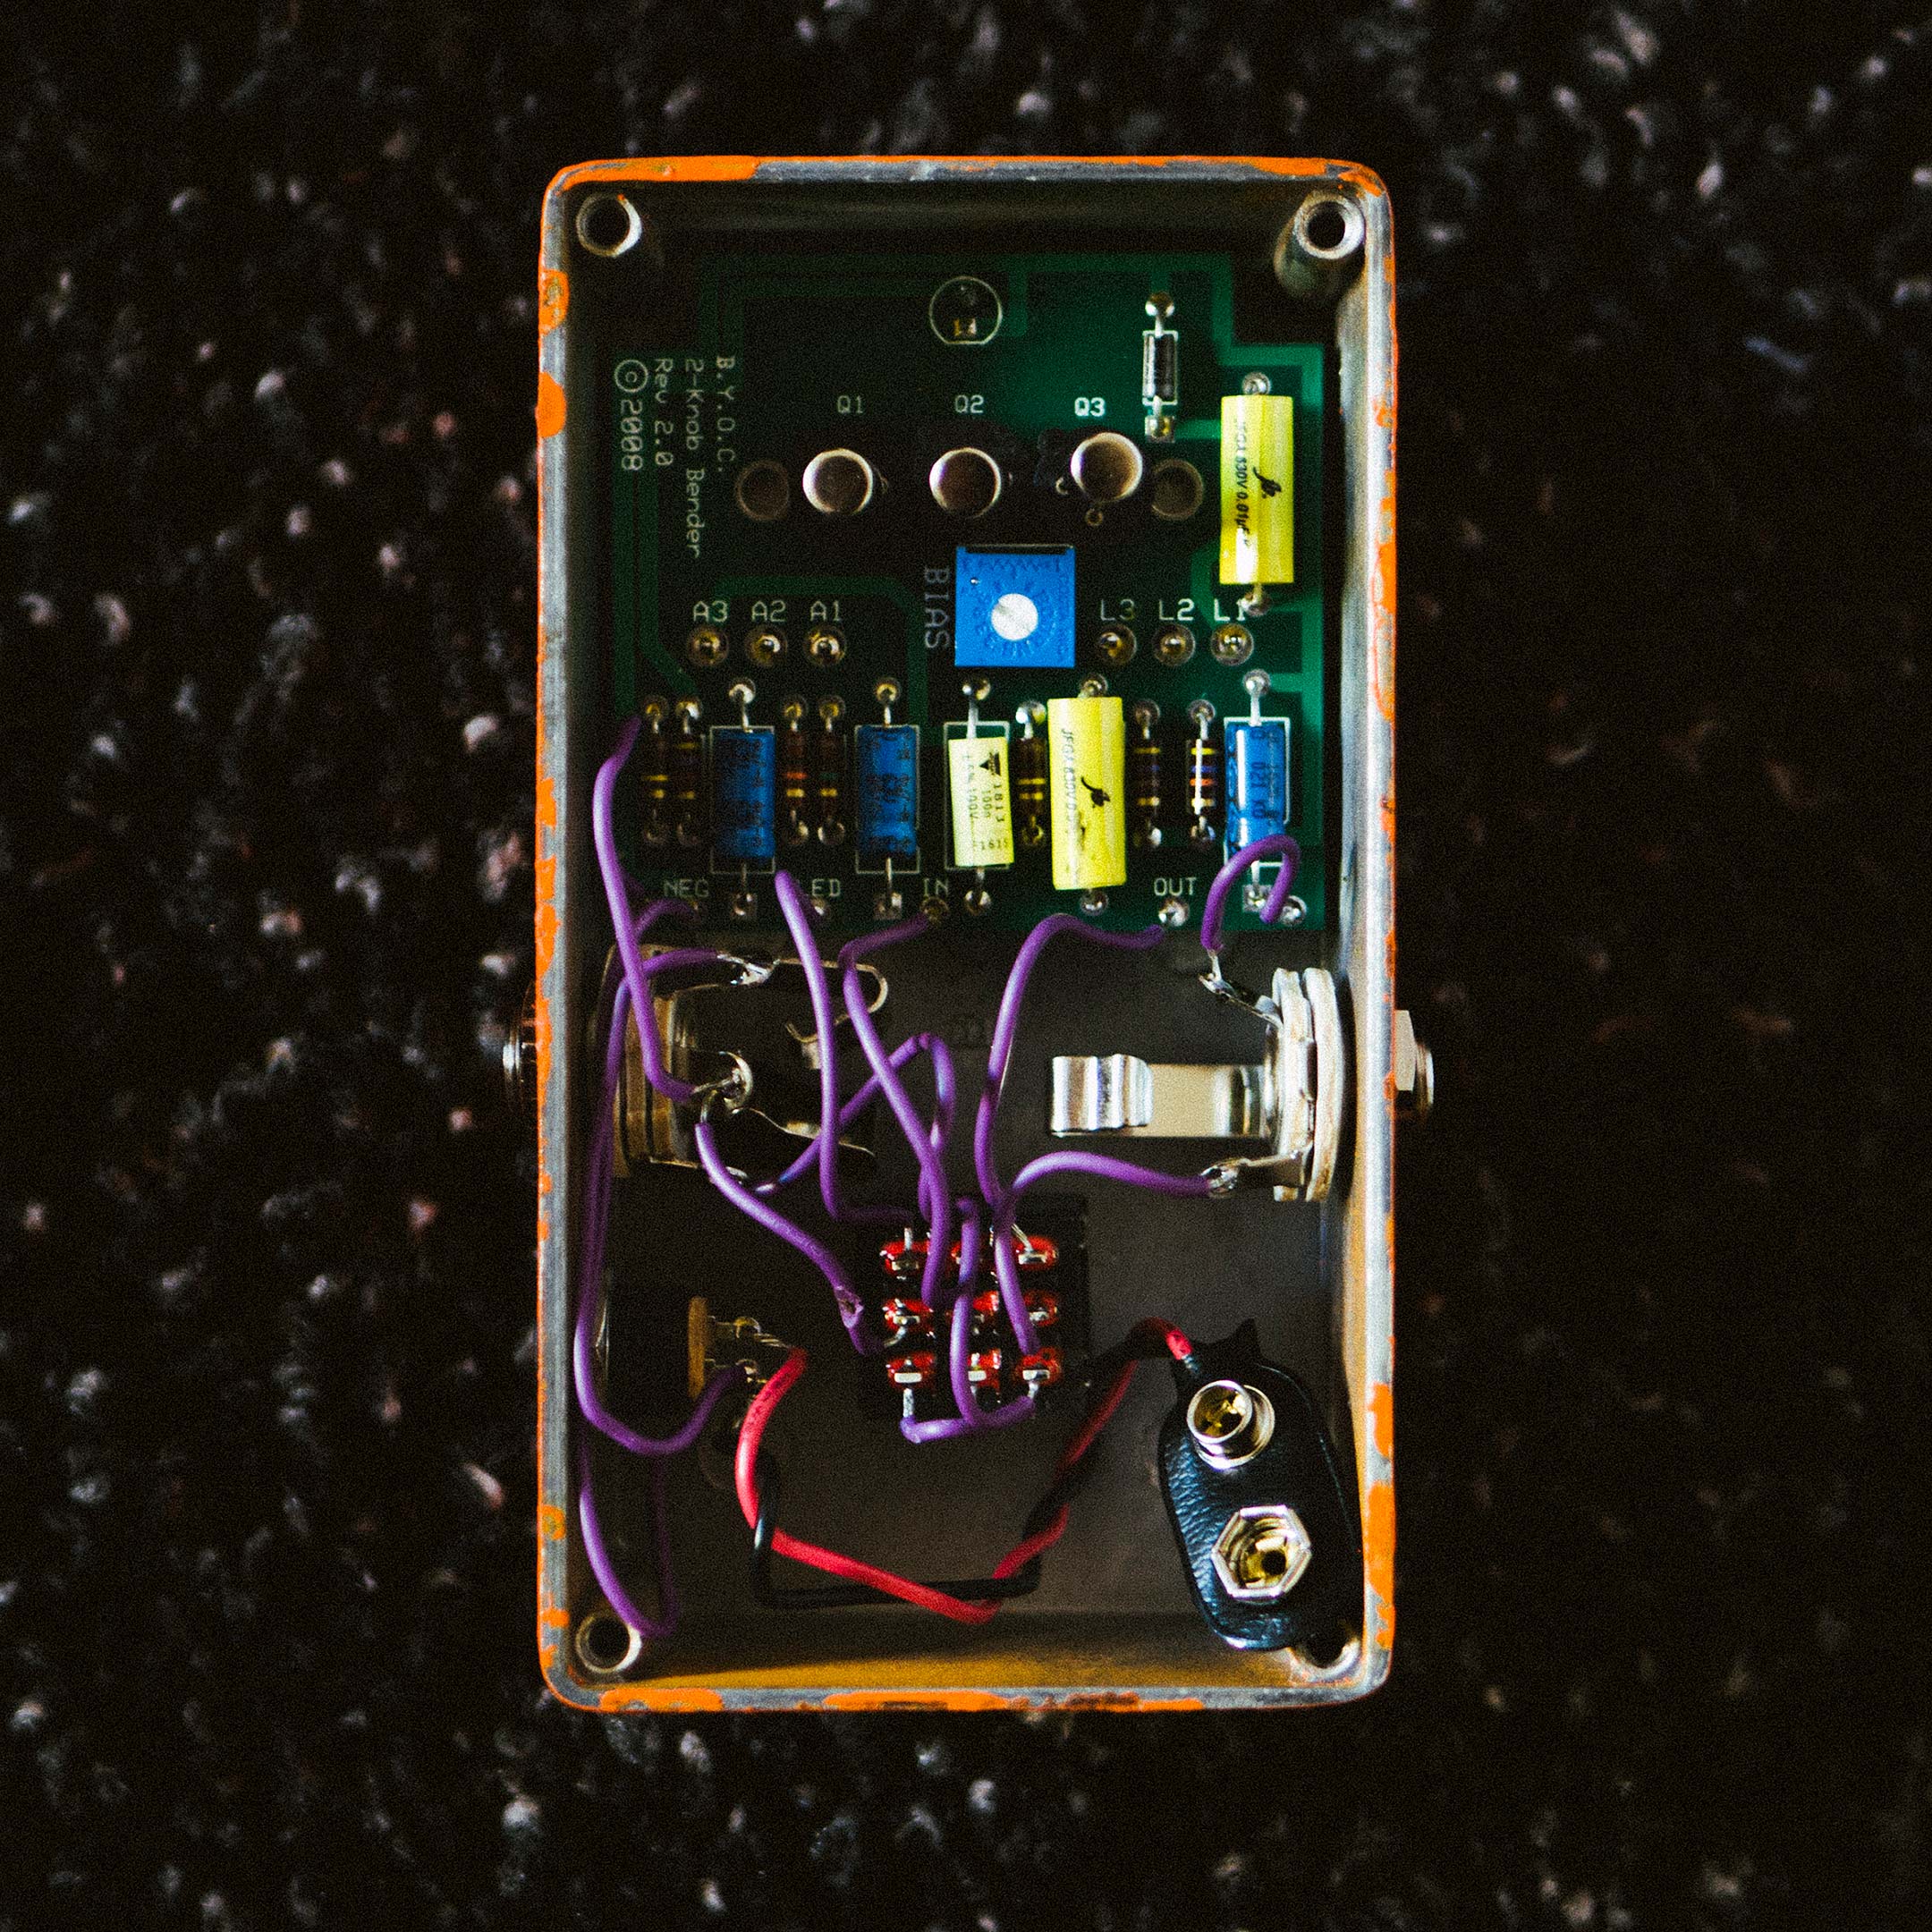 Interiors of fuzz box pedal